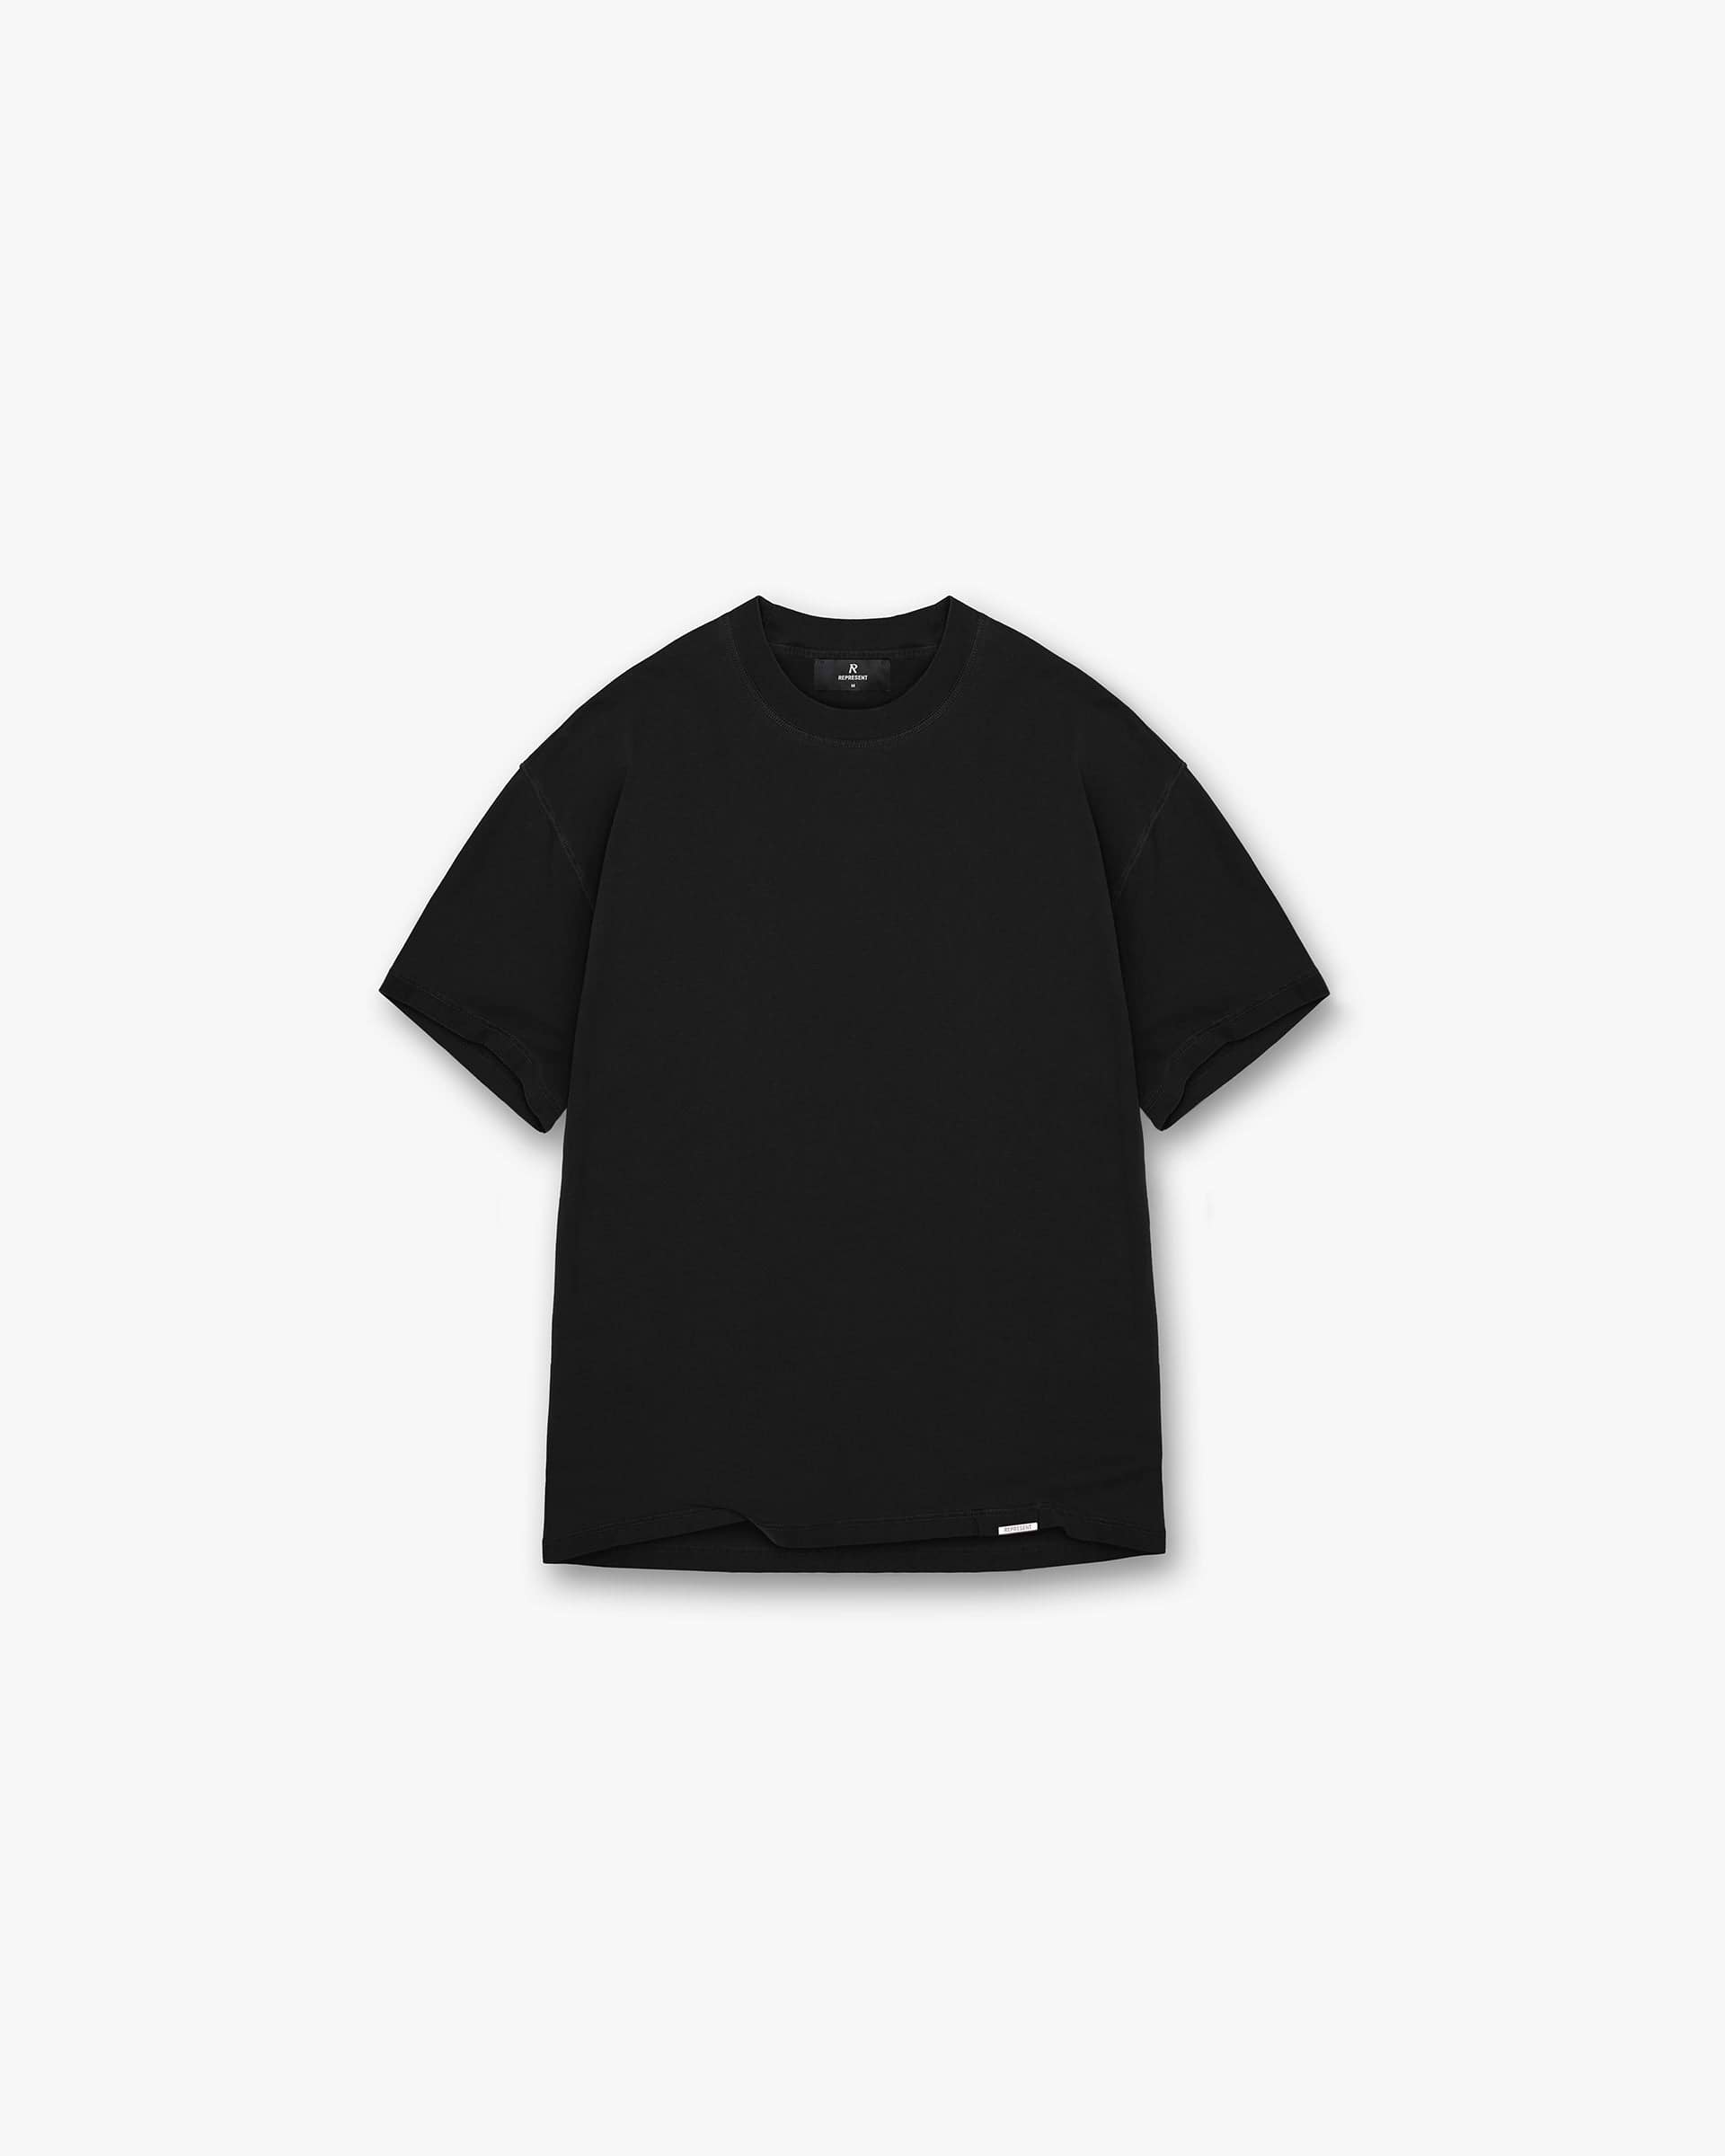 Initial T-Shirt - Black